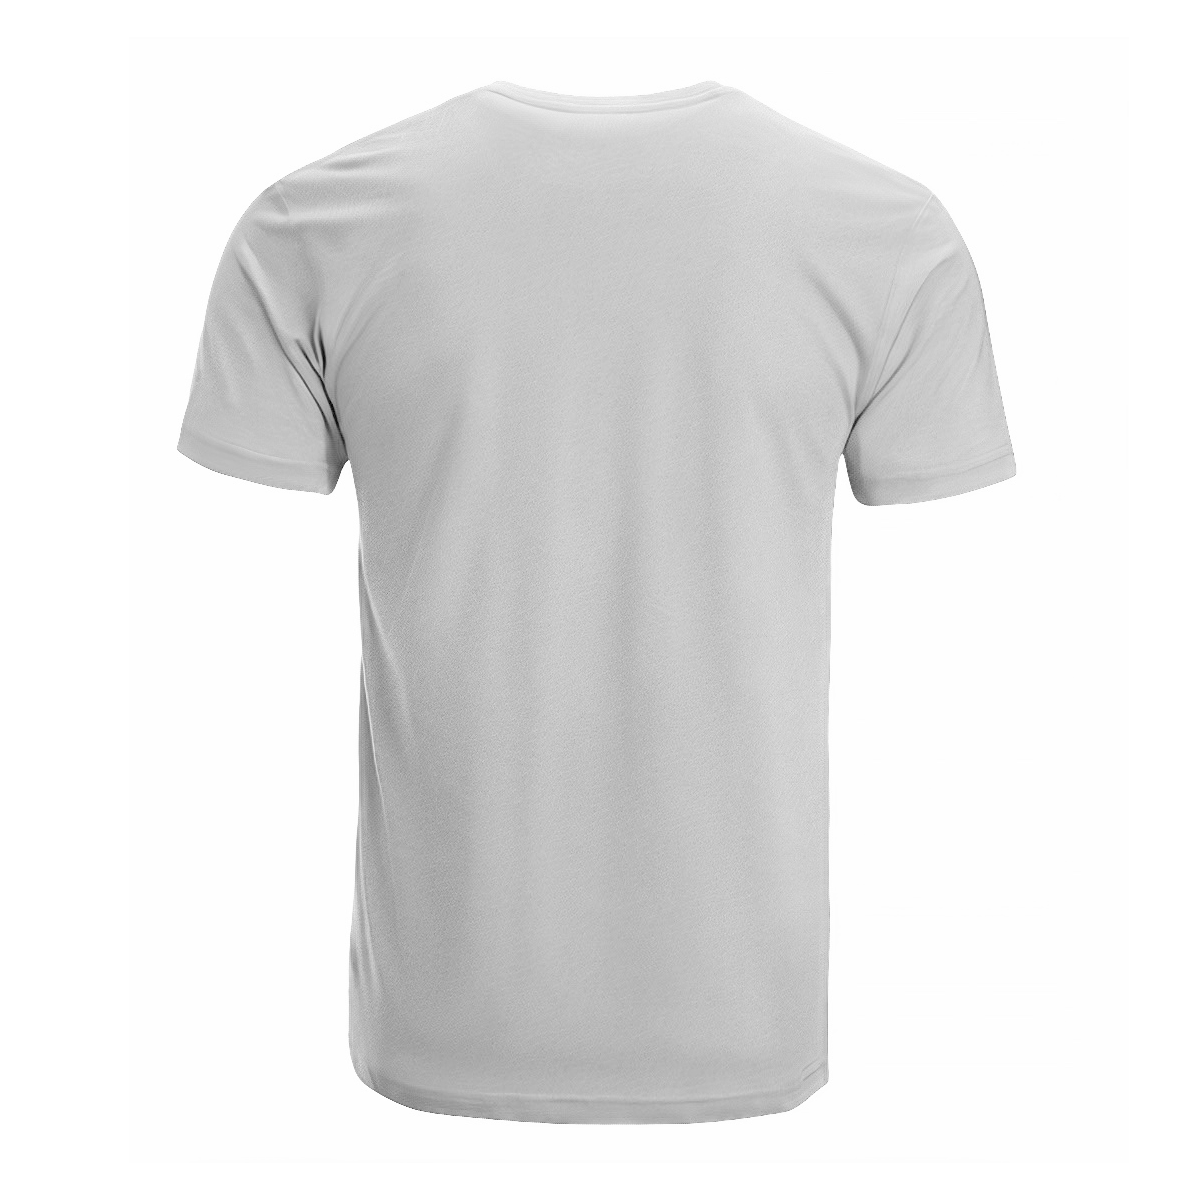 MacKellar Tartan Crest T-shirt - I'm not yelling style